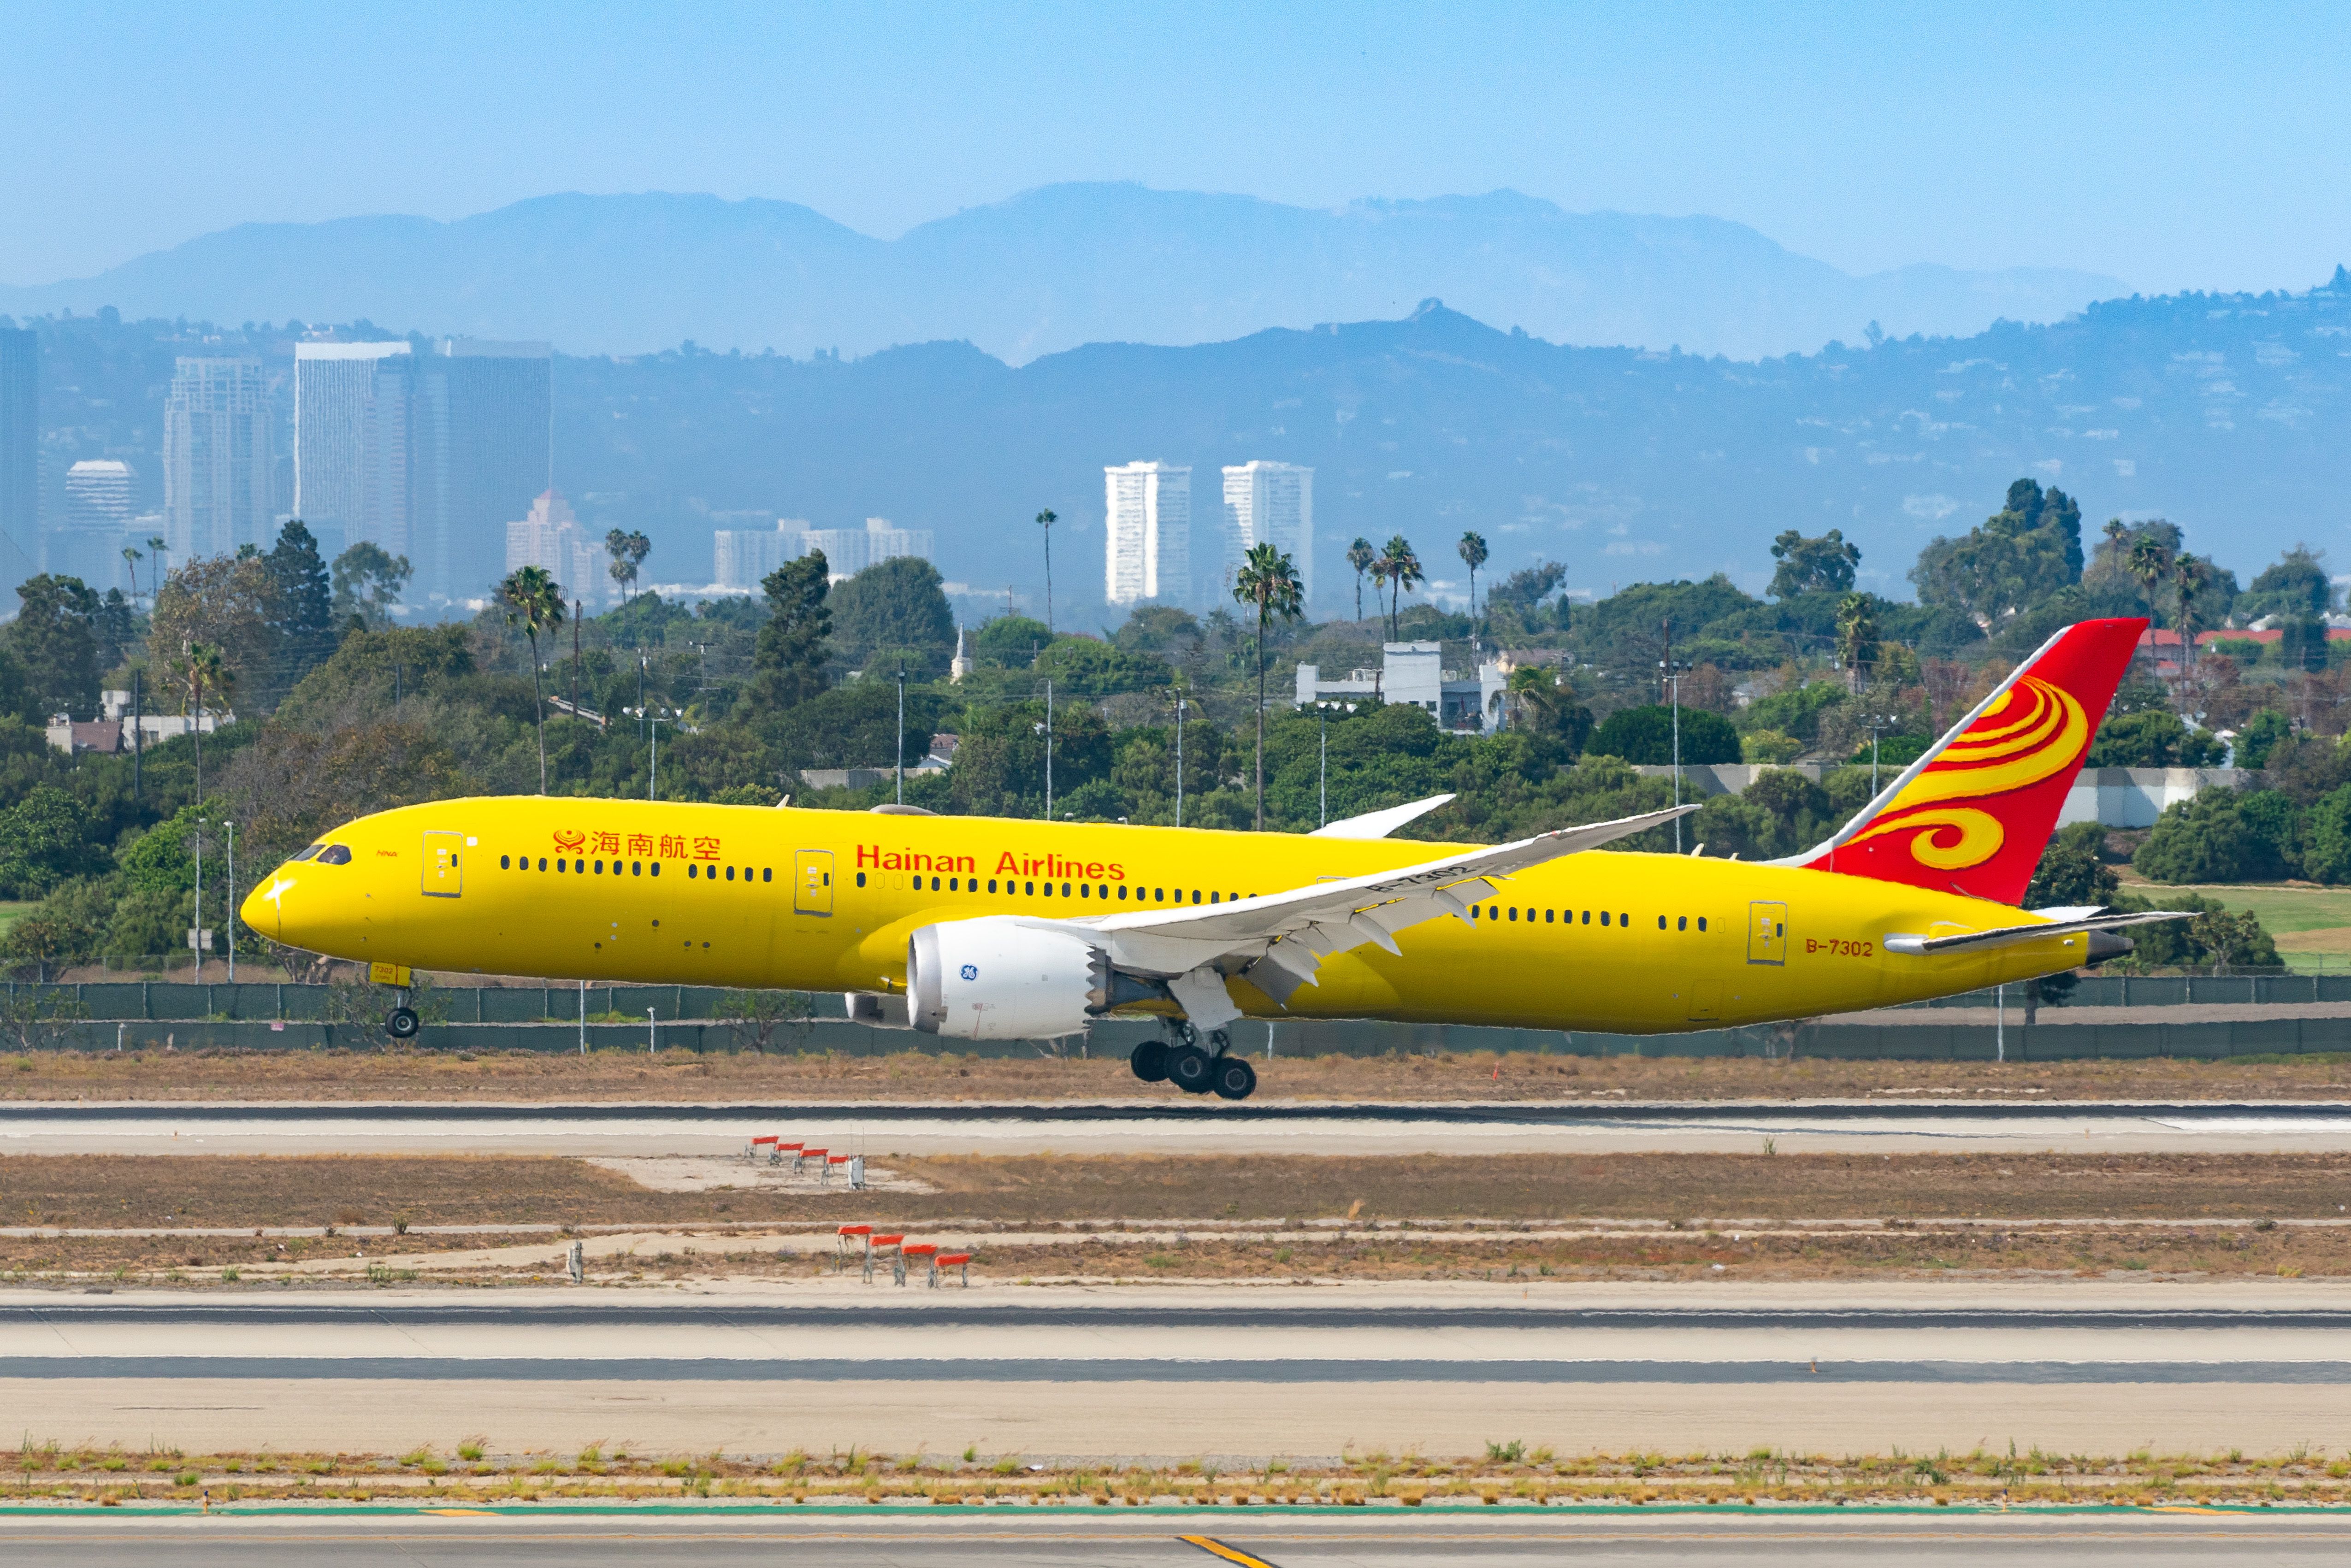 Hainan Airlines Boeing 787-9 Dreamliner arrives at Los Angeles international Airport on September 02, 2022 in Los Angeles, California.